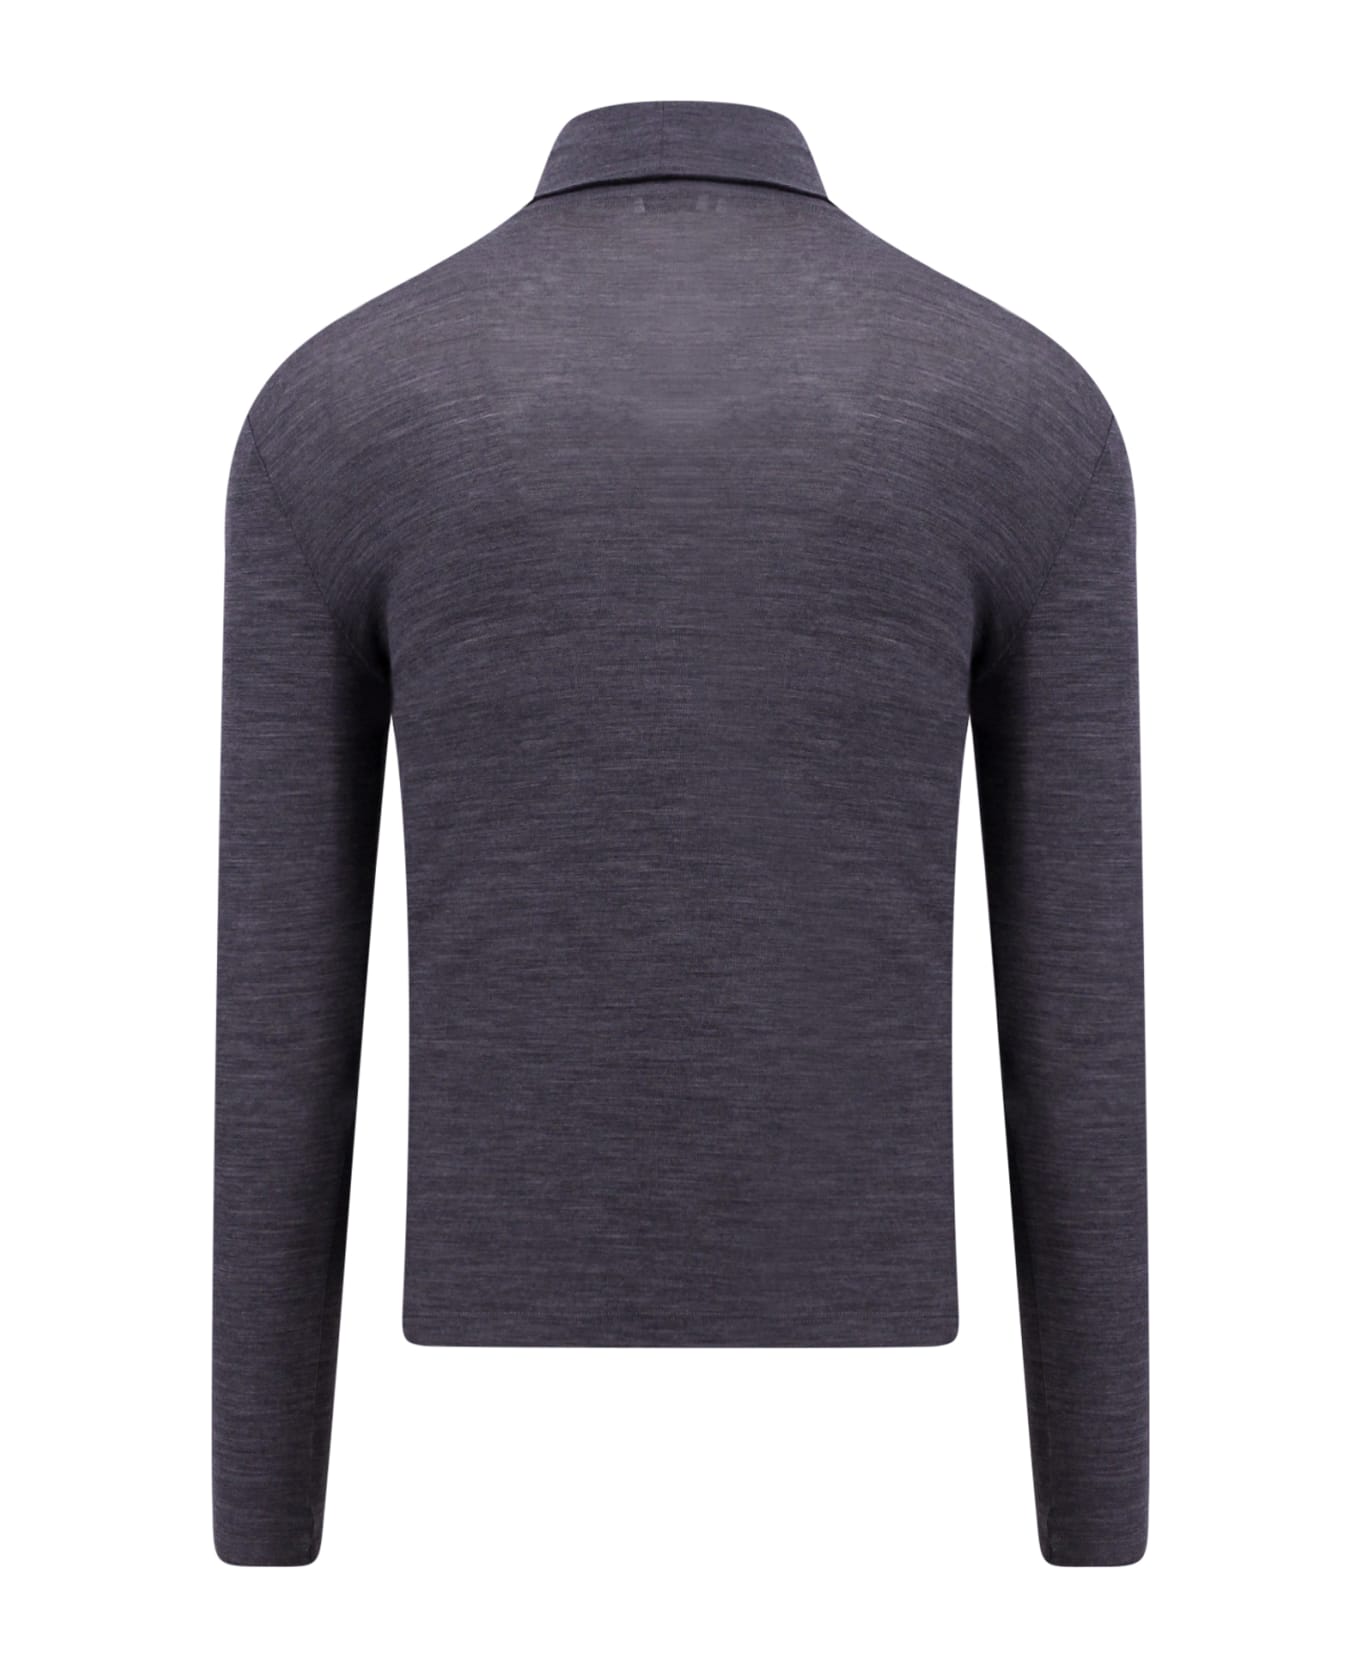 Saint Laurent Sweater - Grey